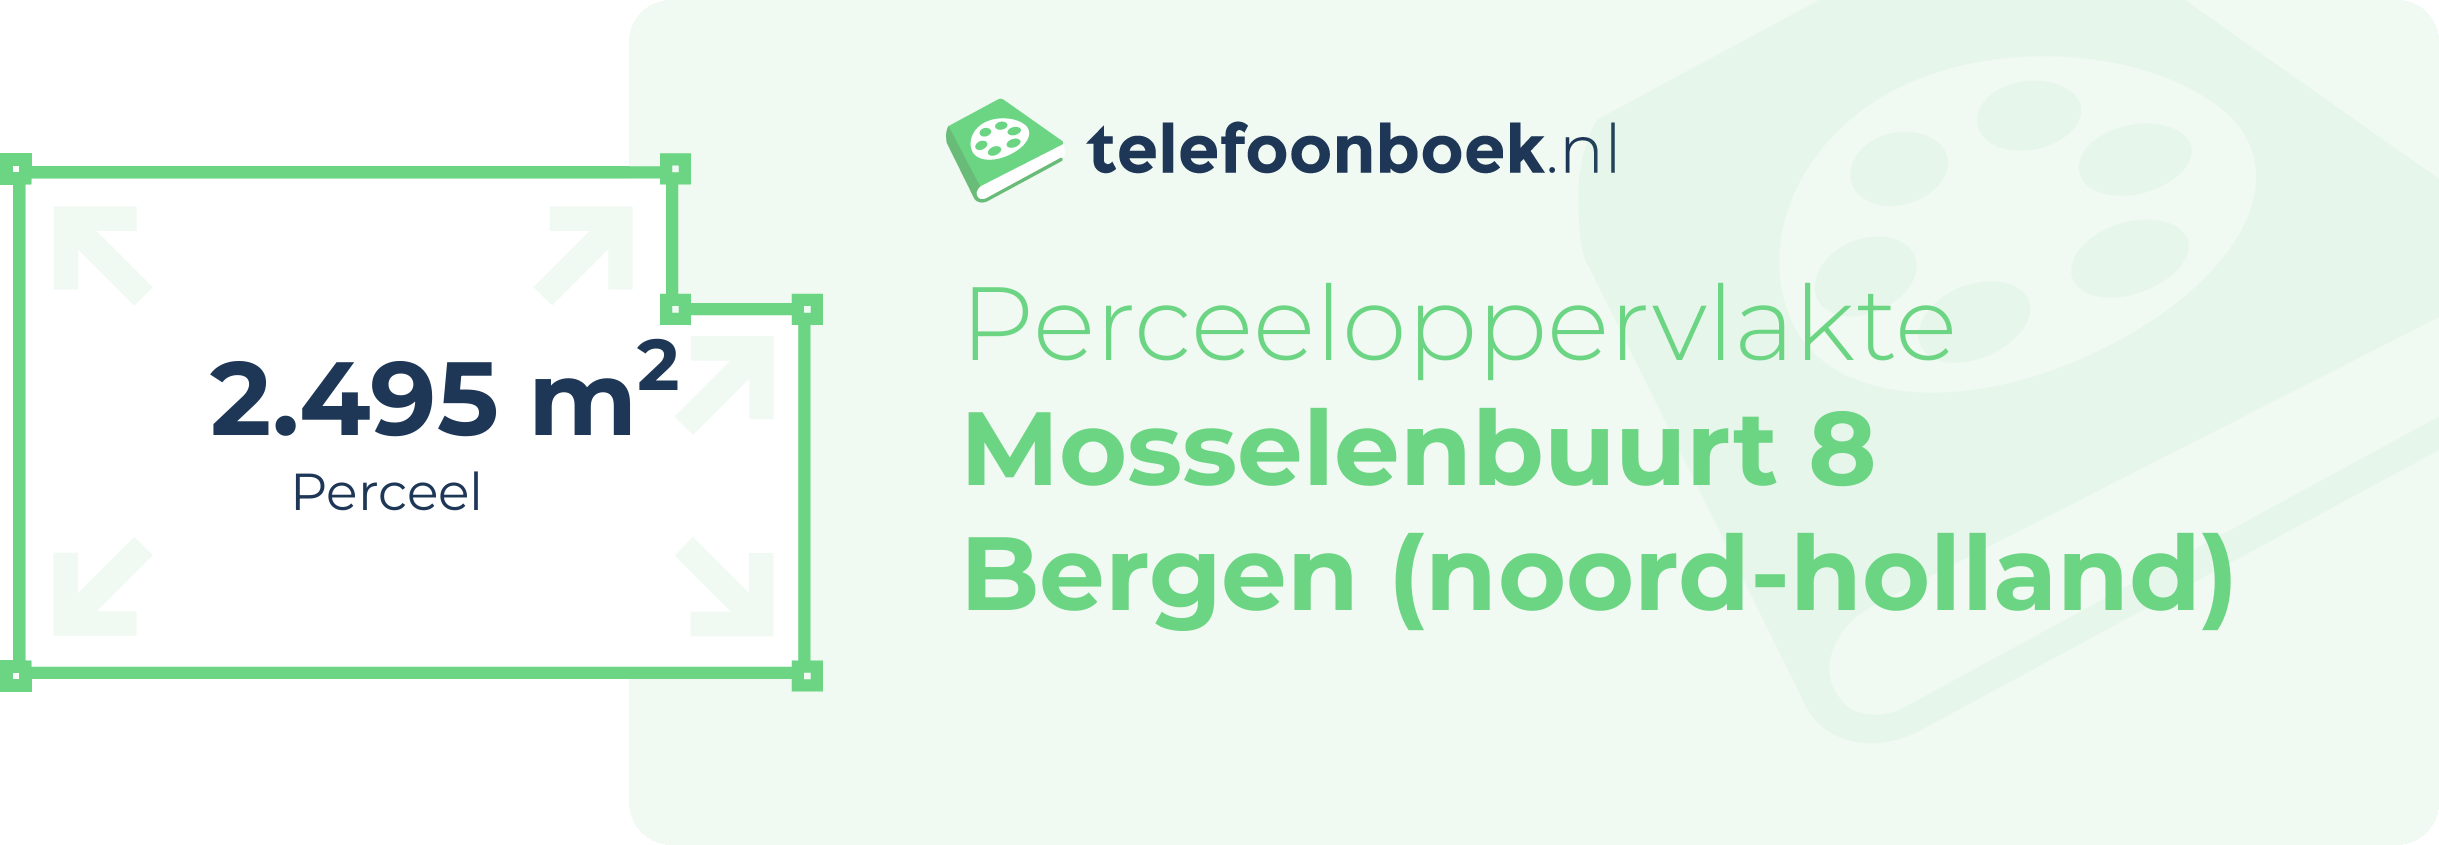 Perceeloppervlakte Mosselenbuurt 8 Bergen (Noord-Holland)